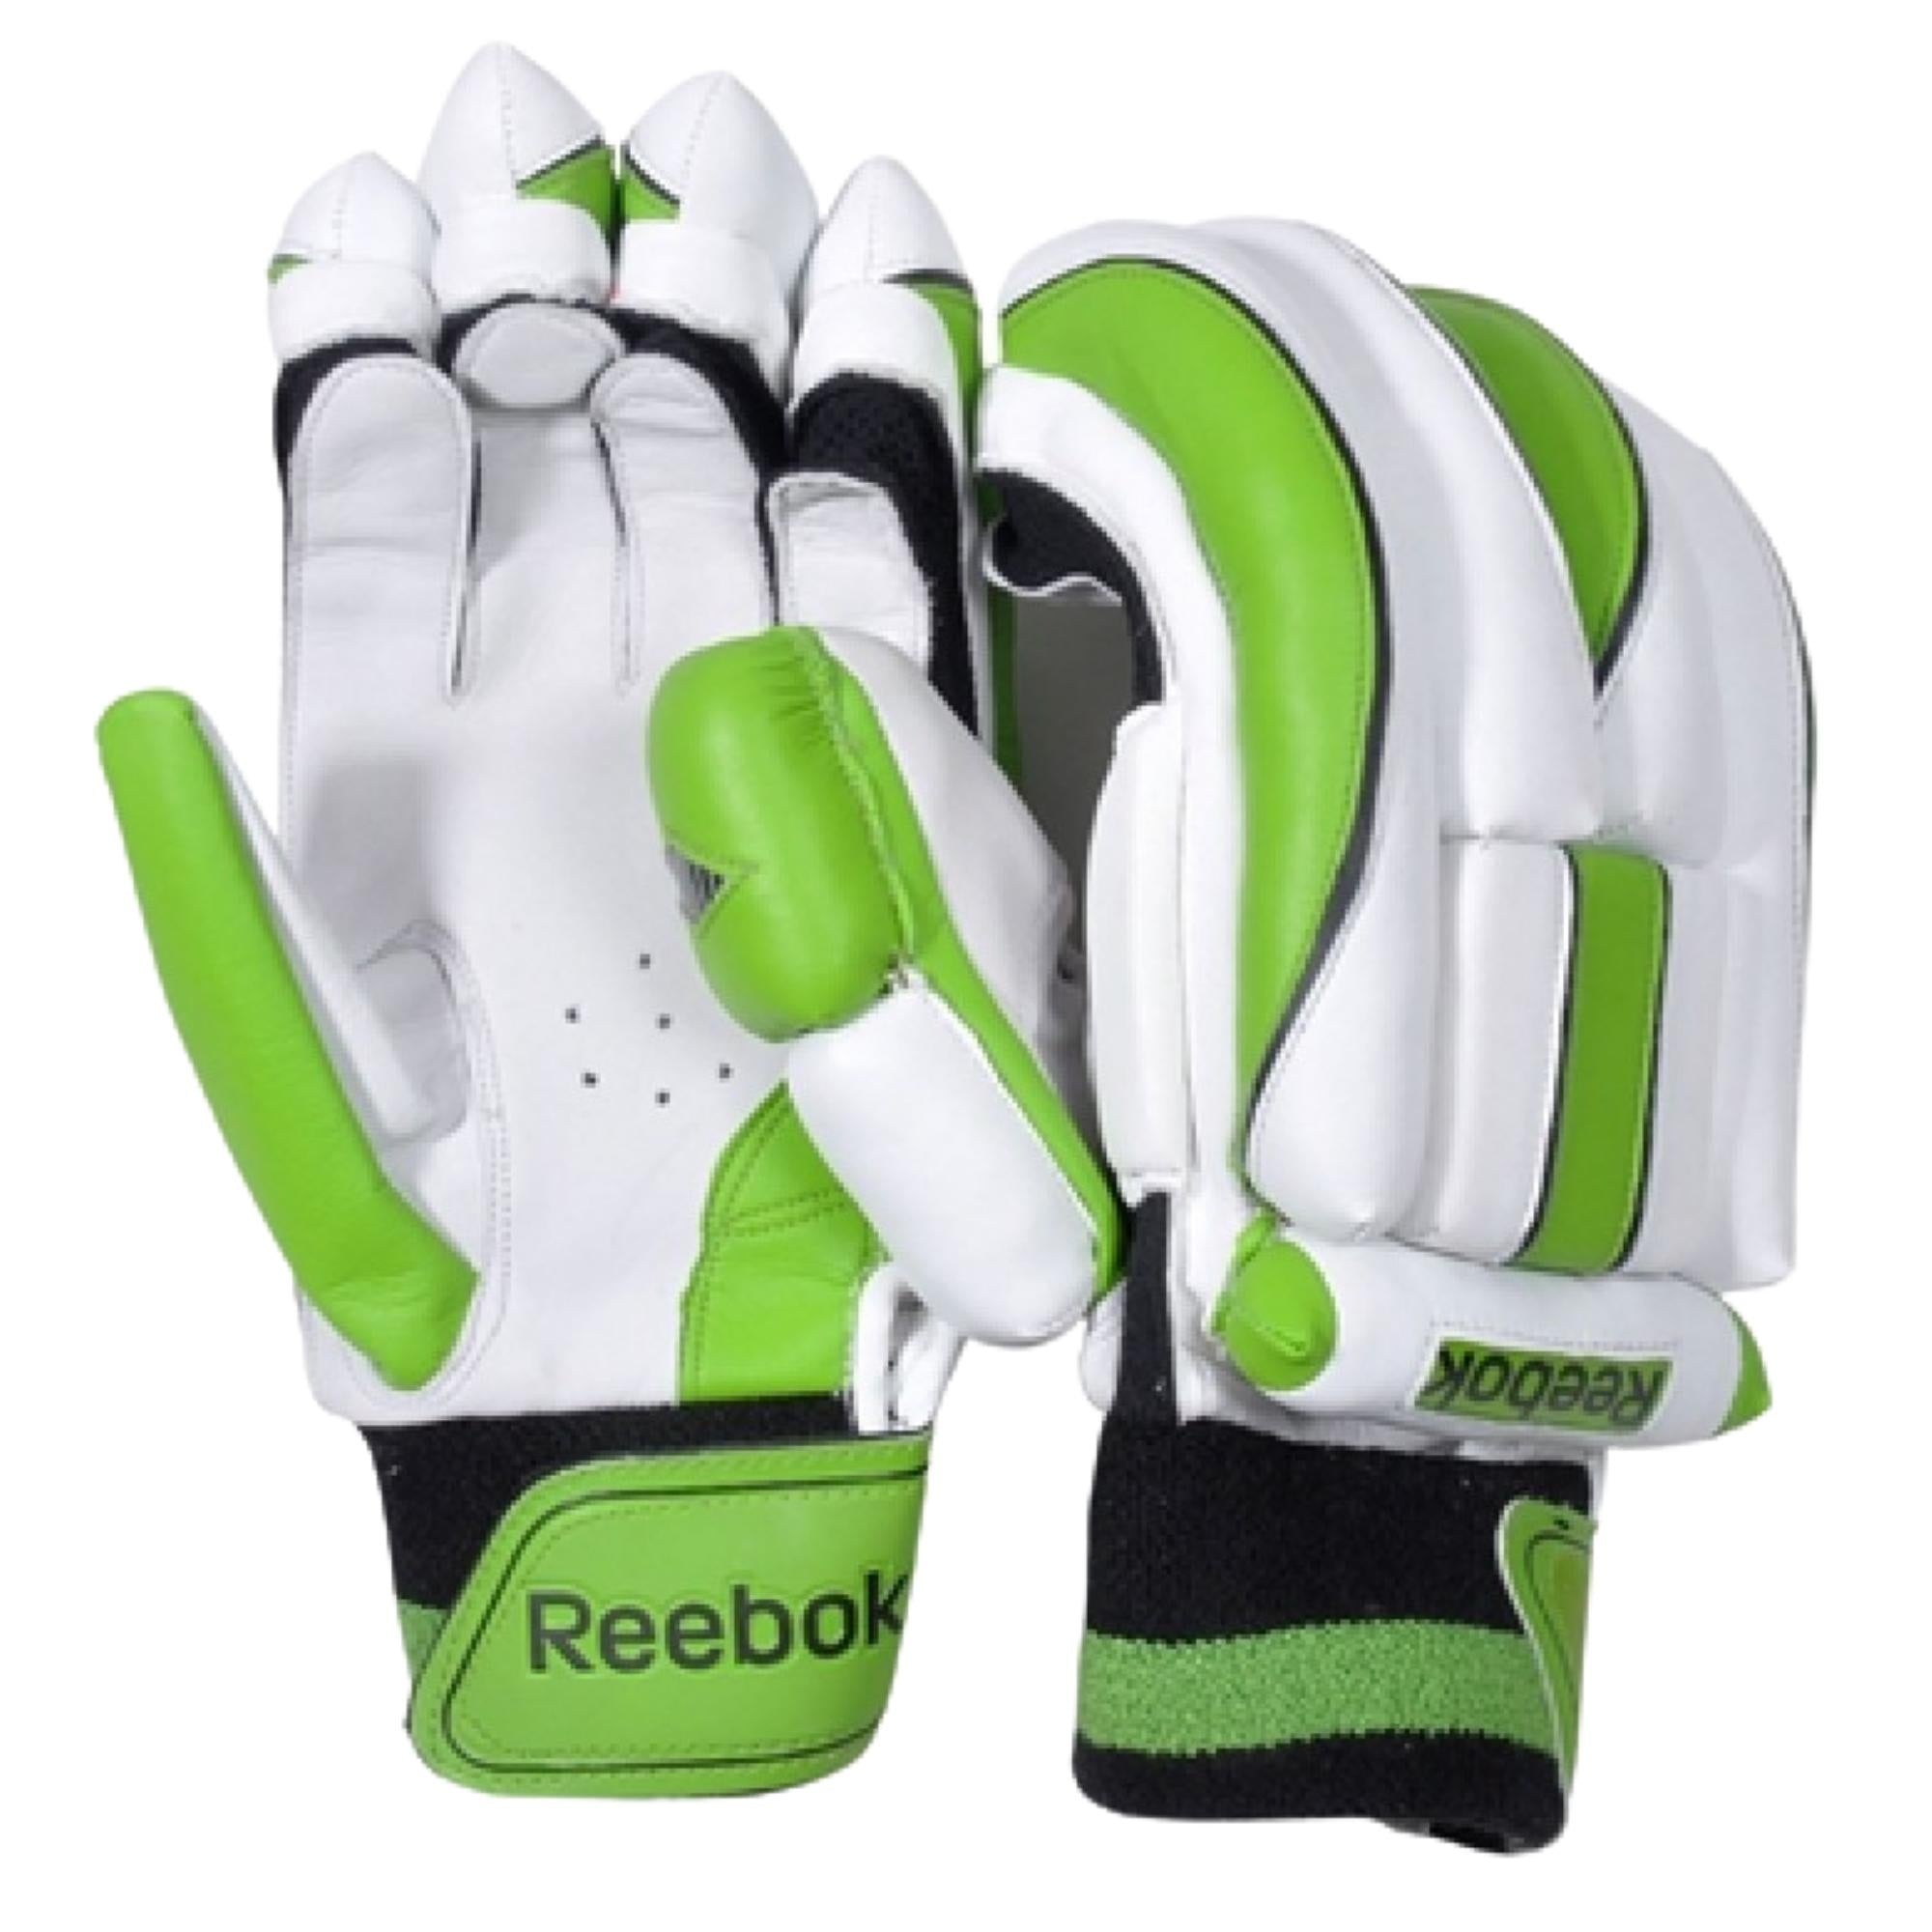 Reebok Cricket Batting Gloves Centurion Pro